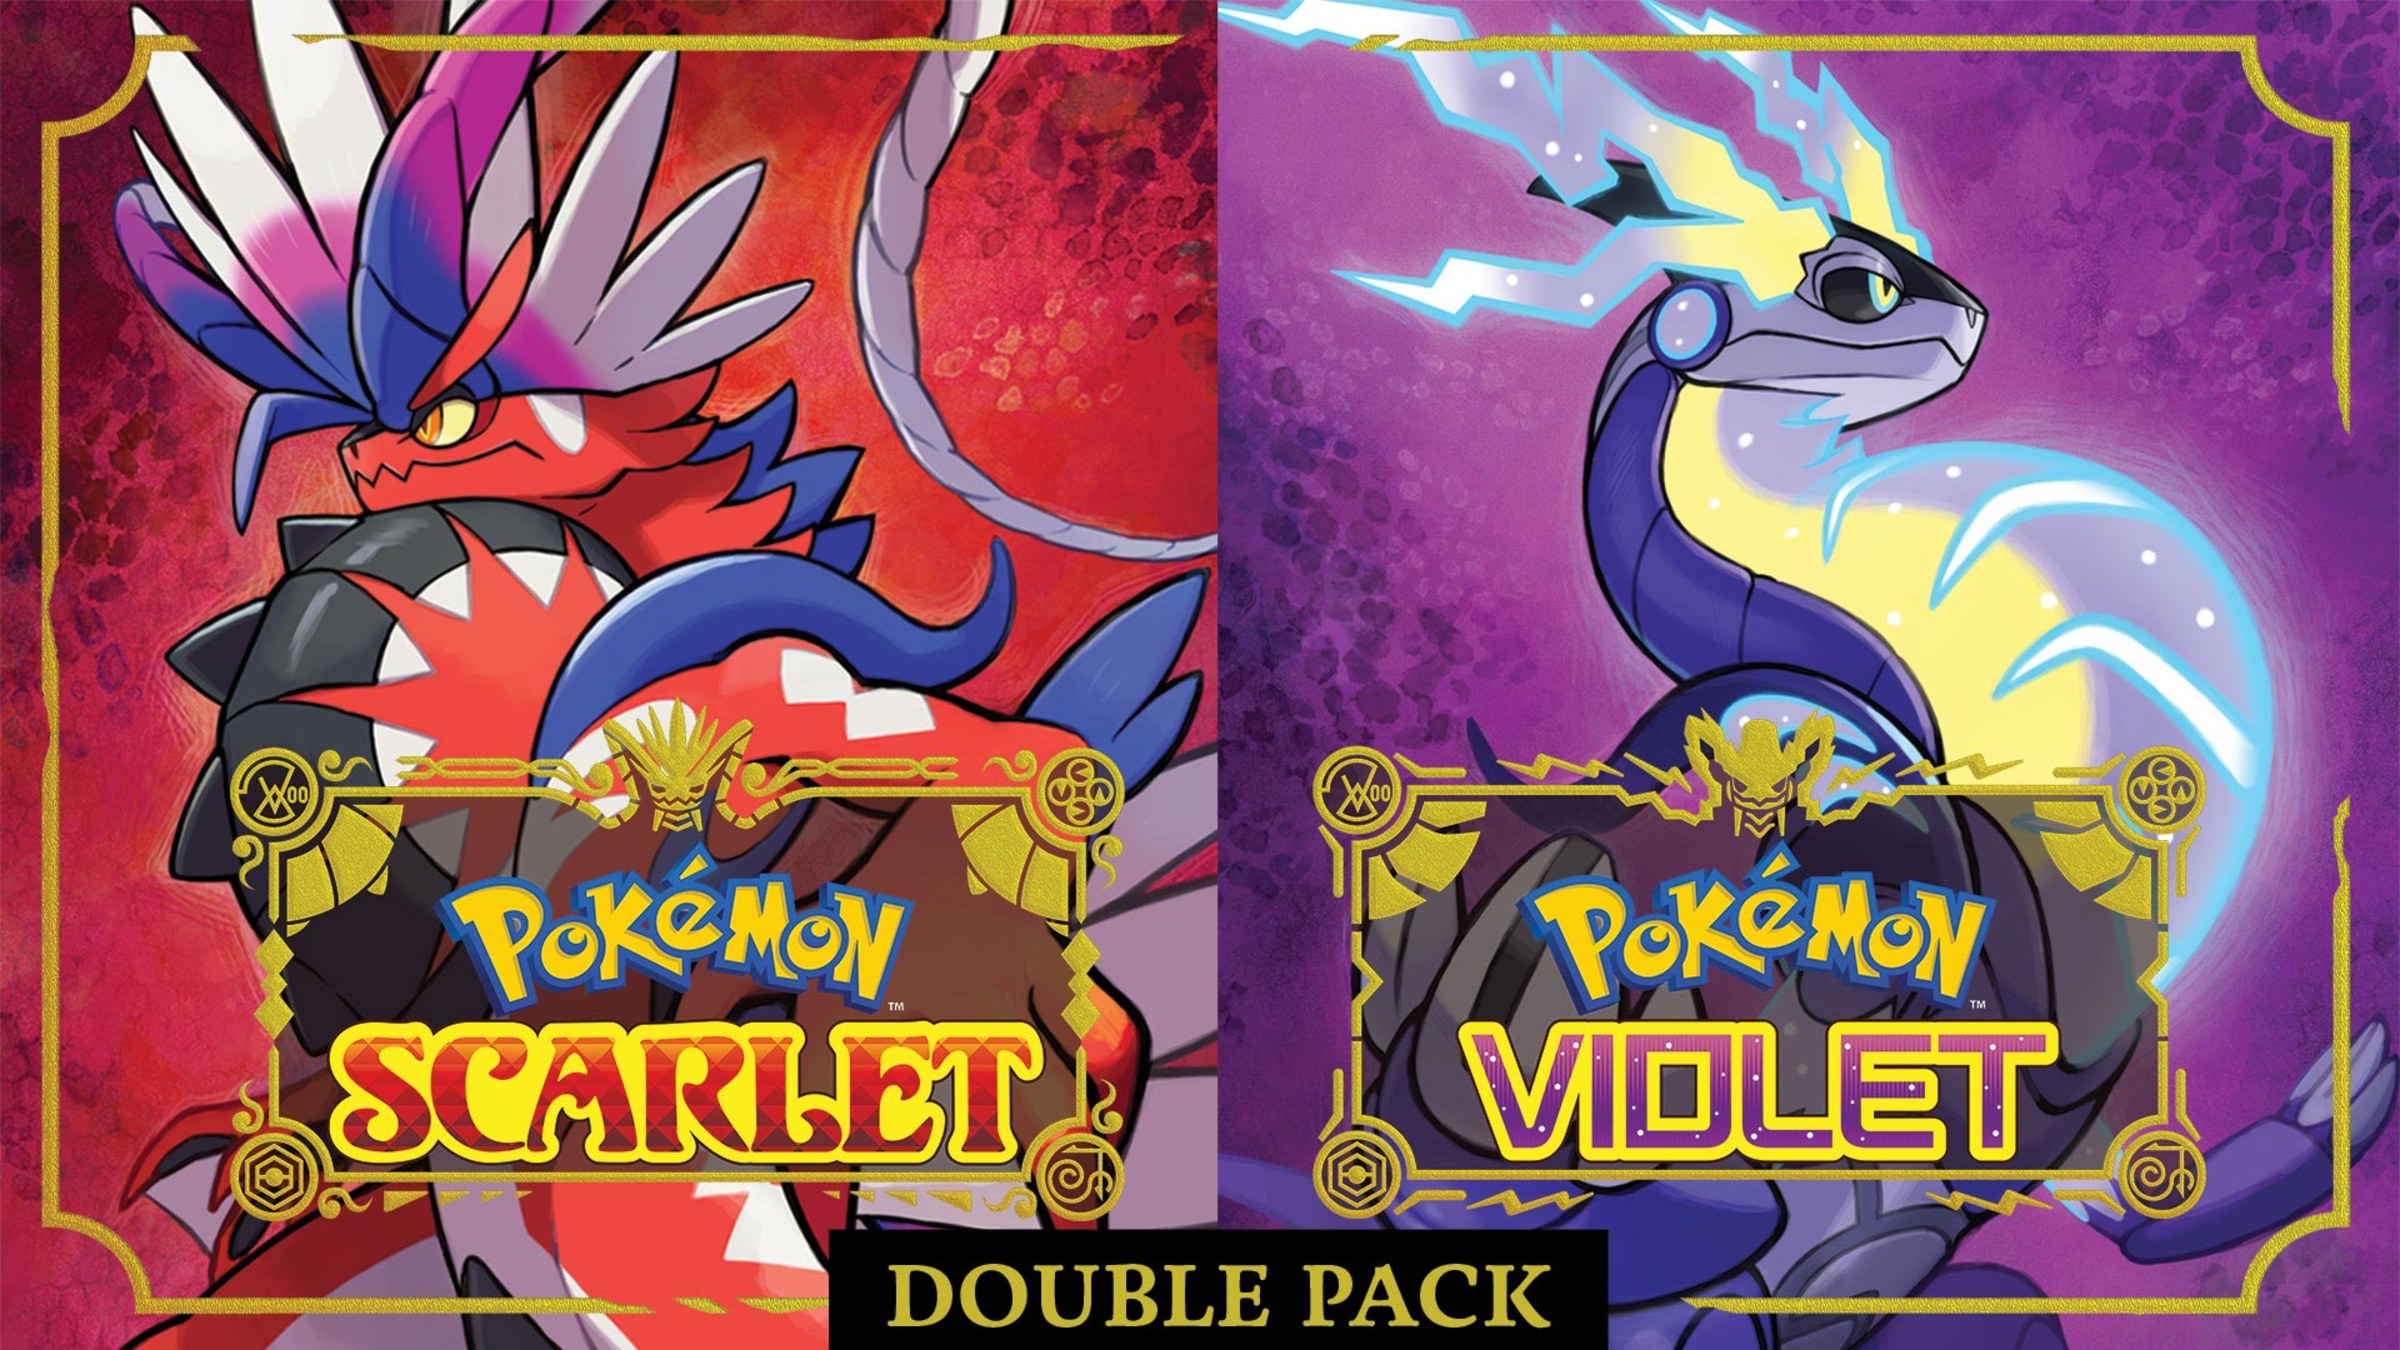 Pokémon™ Scarlet and Pokémon™ Violet Double Pack for Nintendo